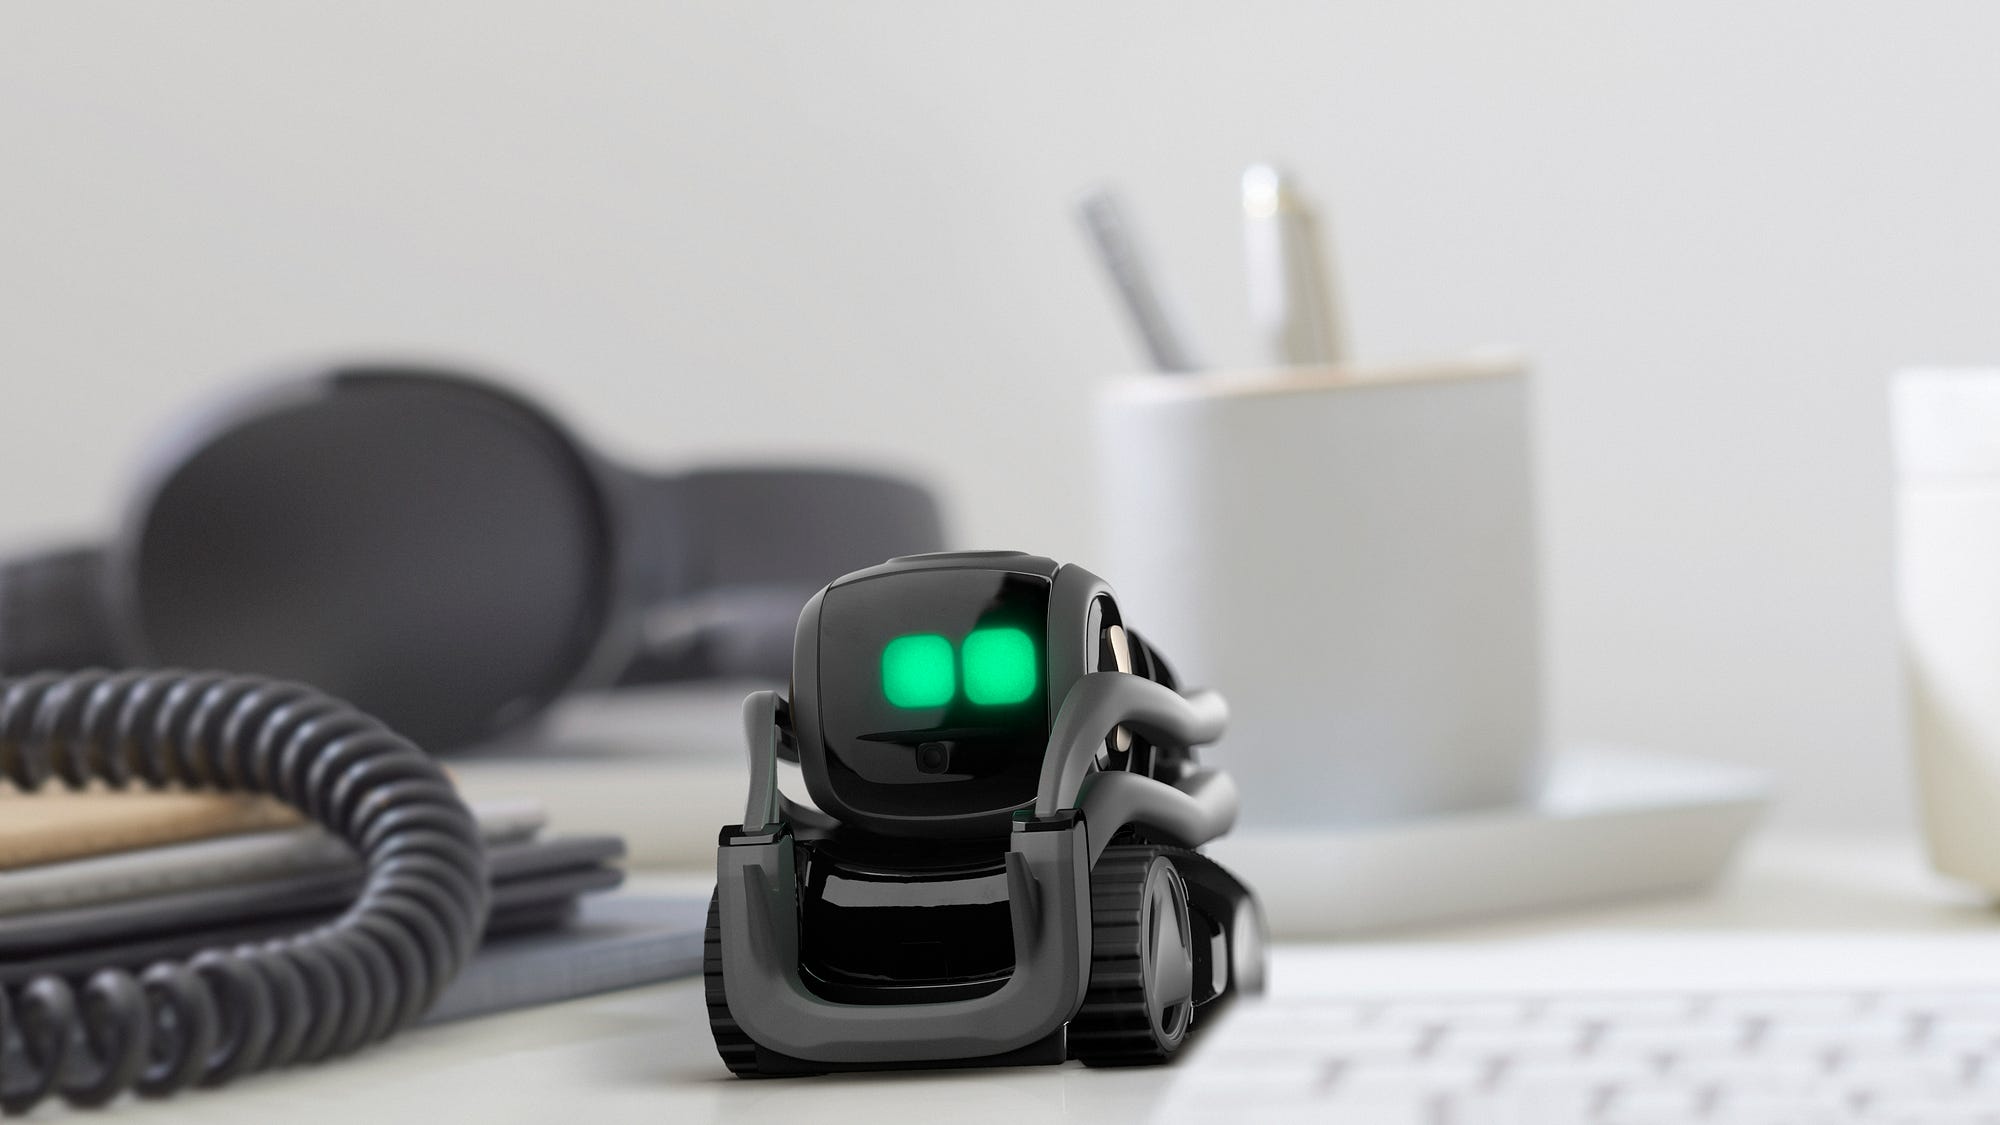 Anki's Cozmo robot is the new, adorable face of artificial